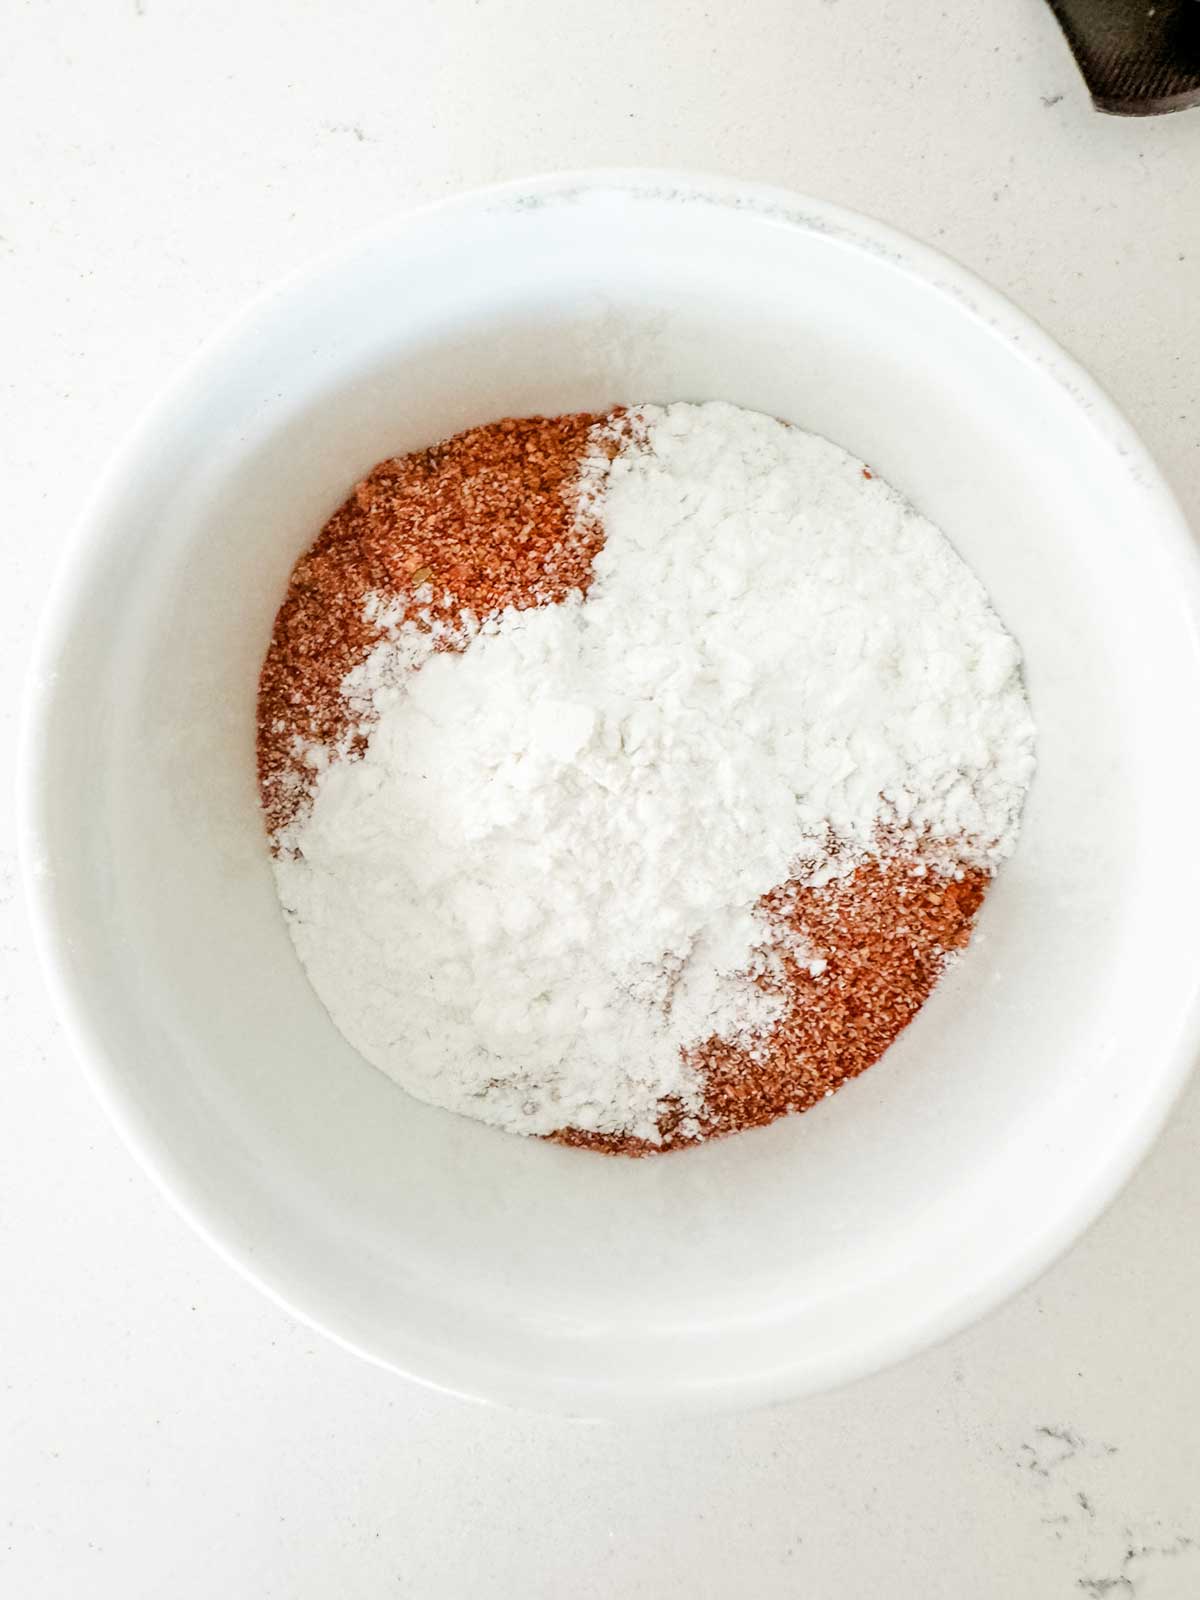 Baking soda and seasonings in a small bowl.